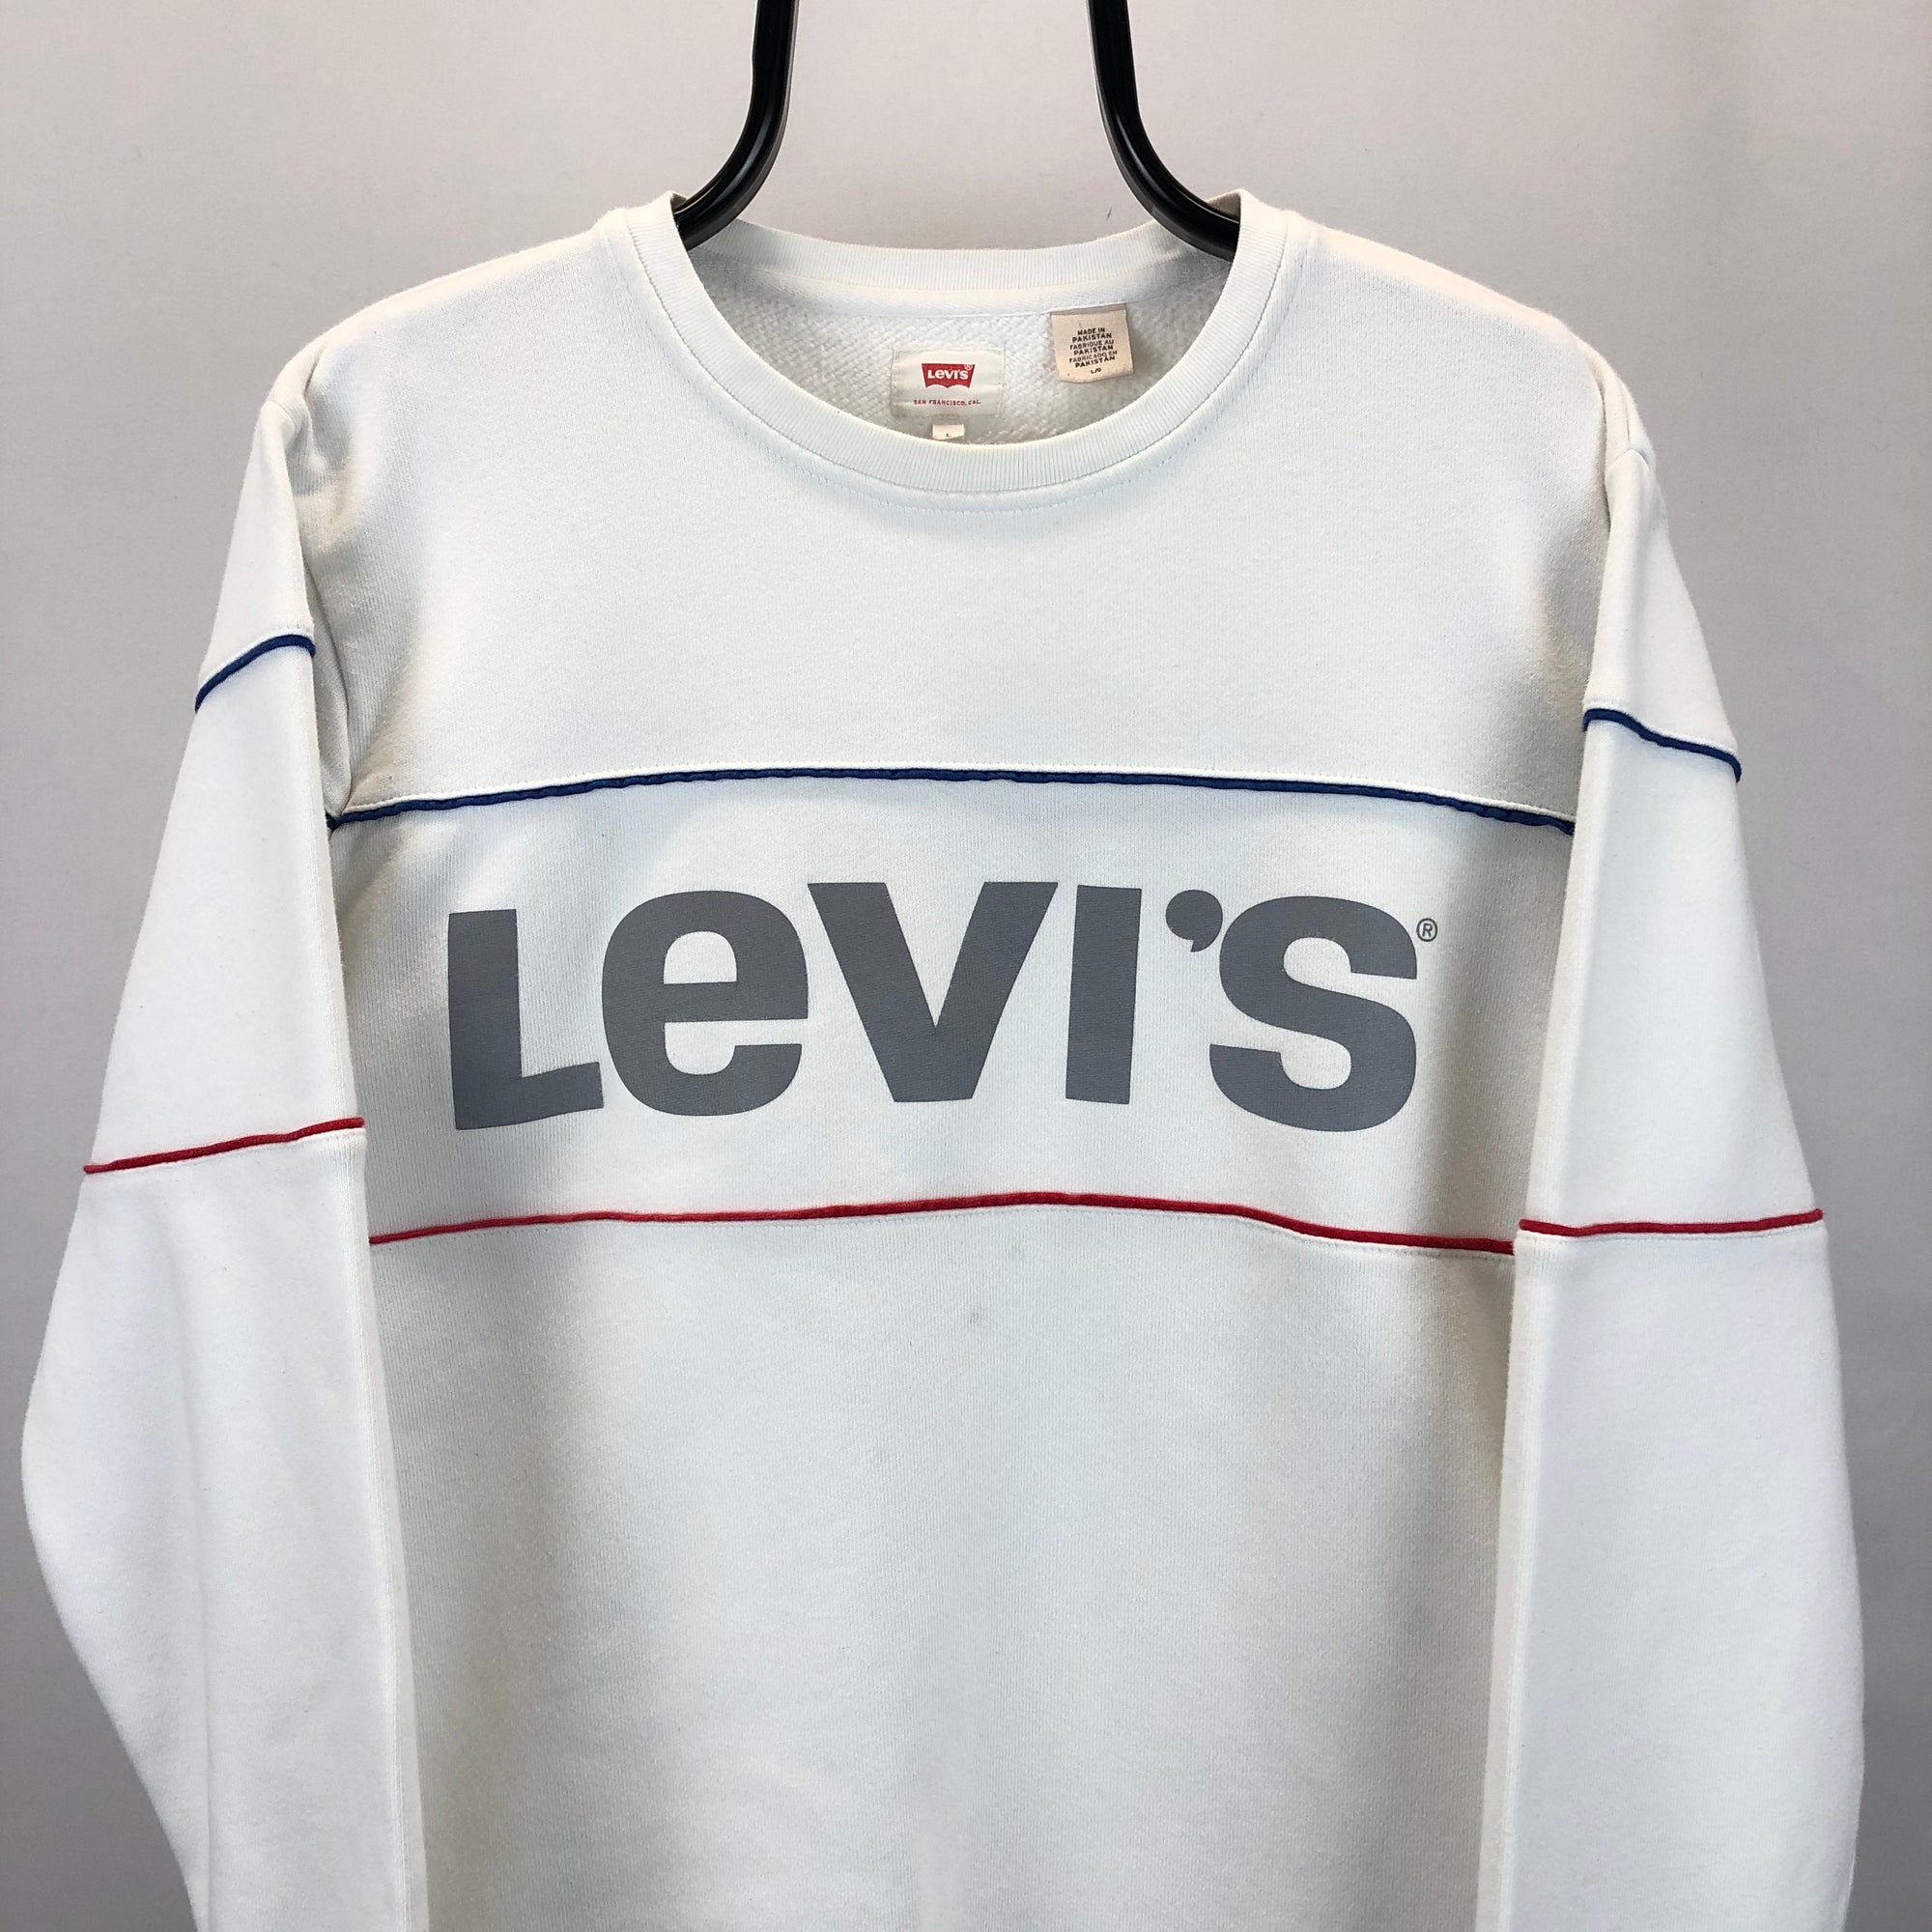 Levi's Spellout Sweatshirt in White/Silver - Men's Medium/Women's Large